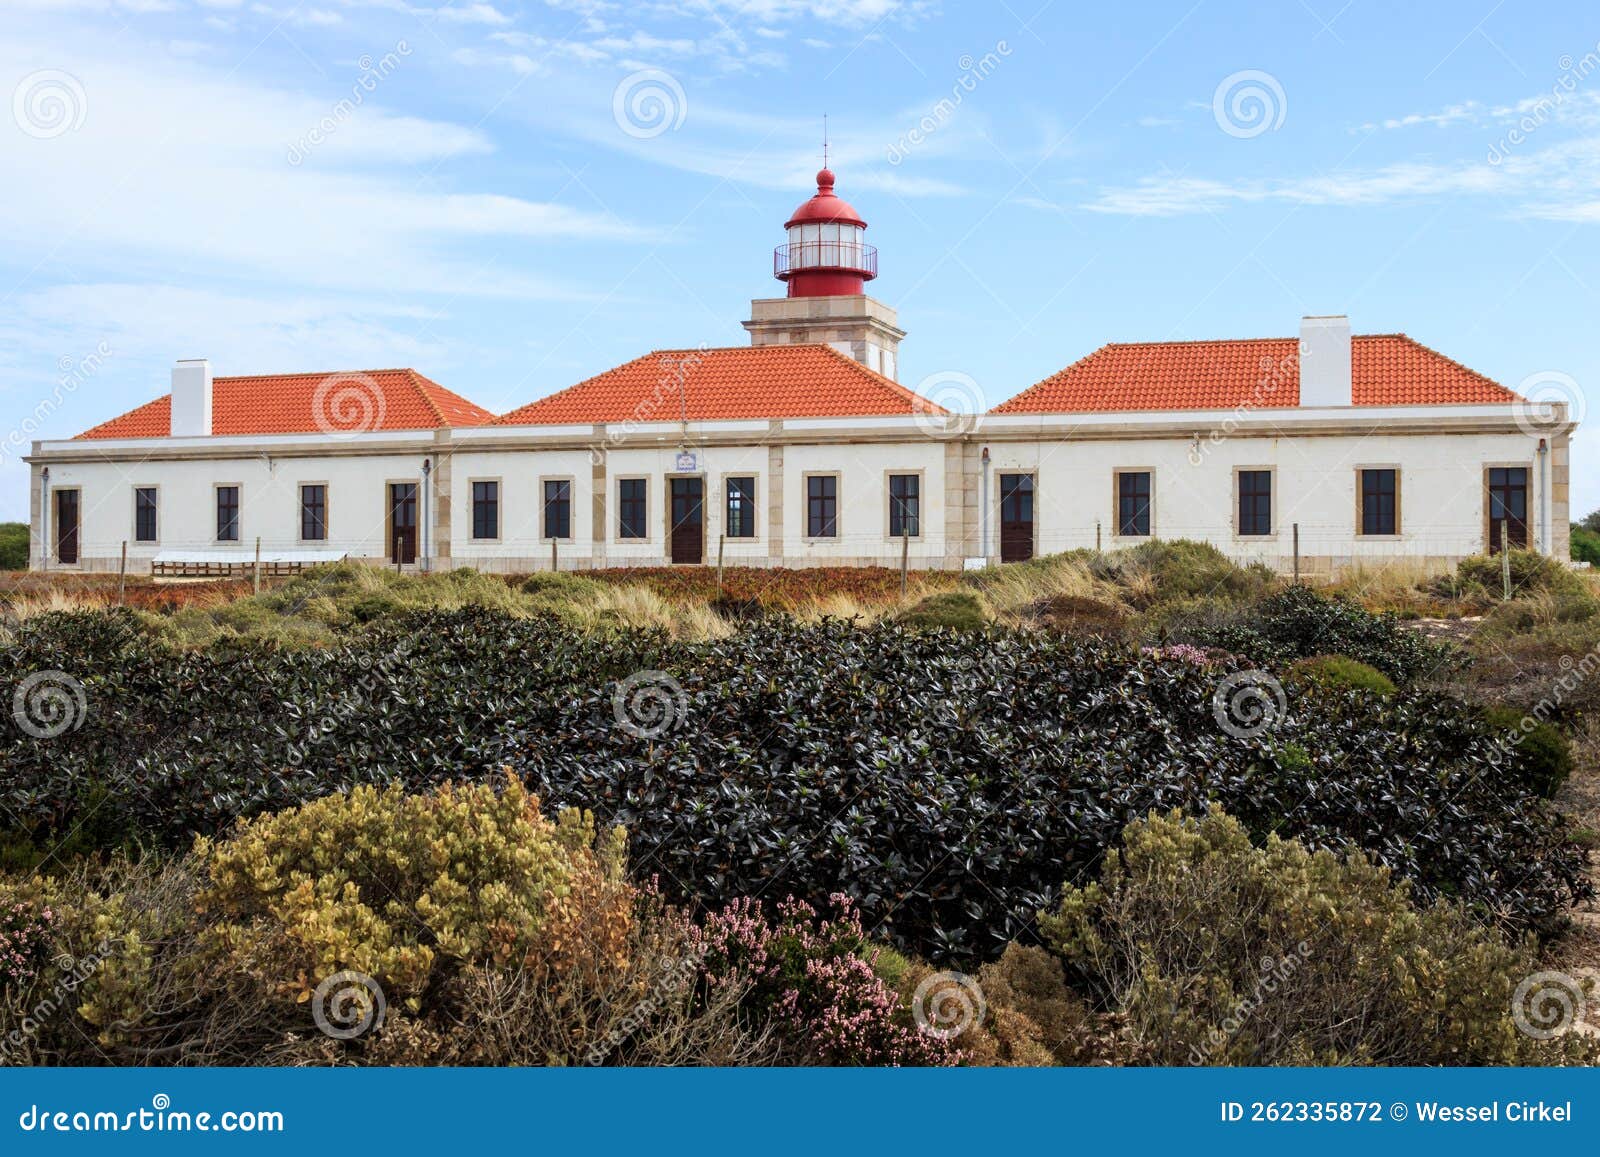 cabo sardao lighthouse near odemira, portugal